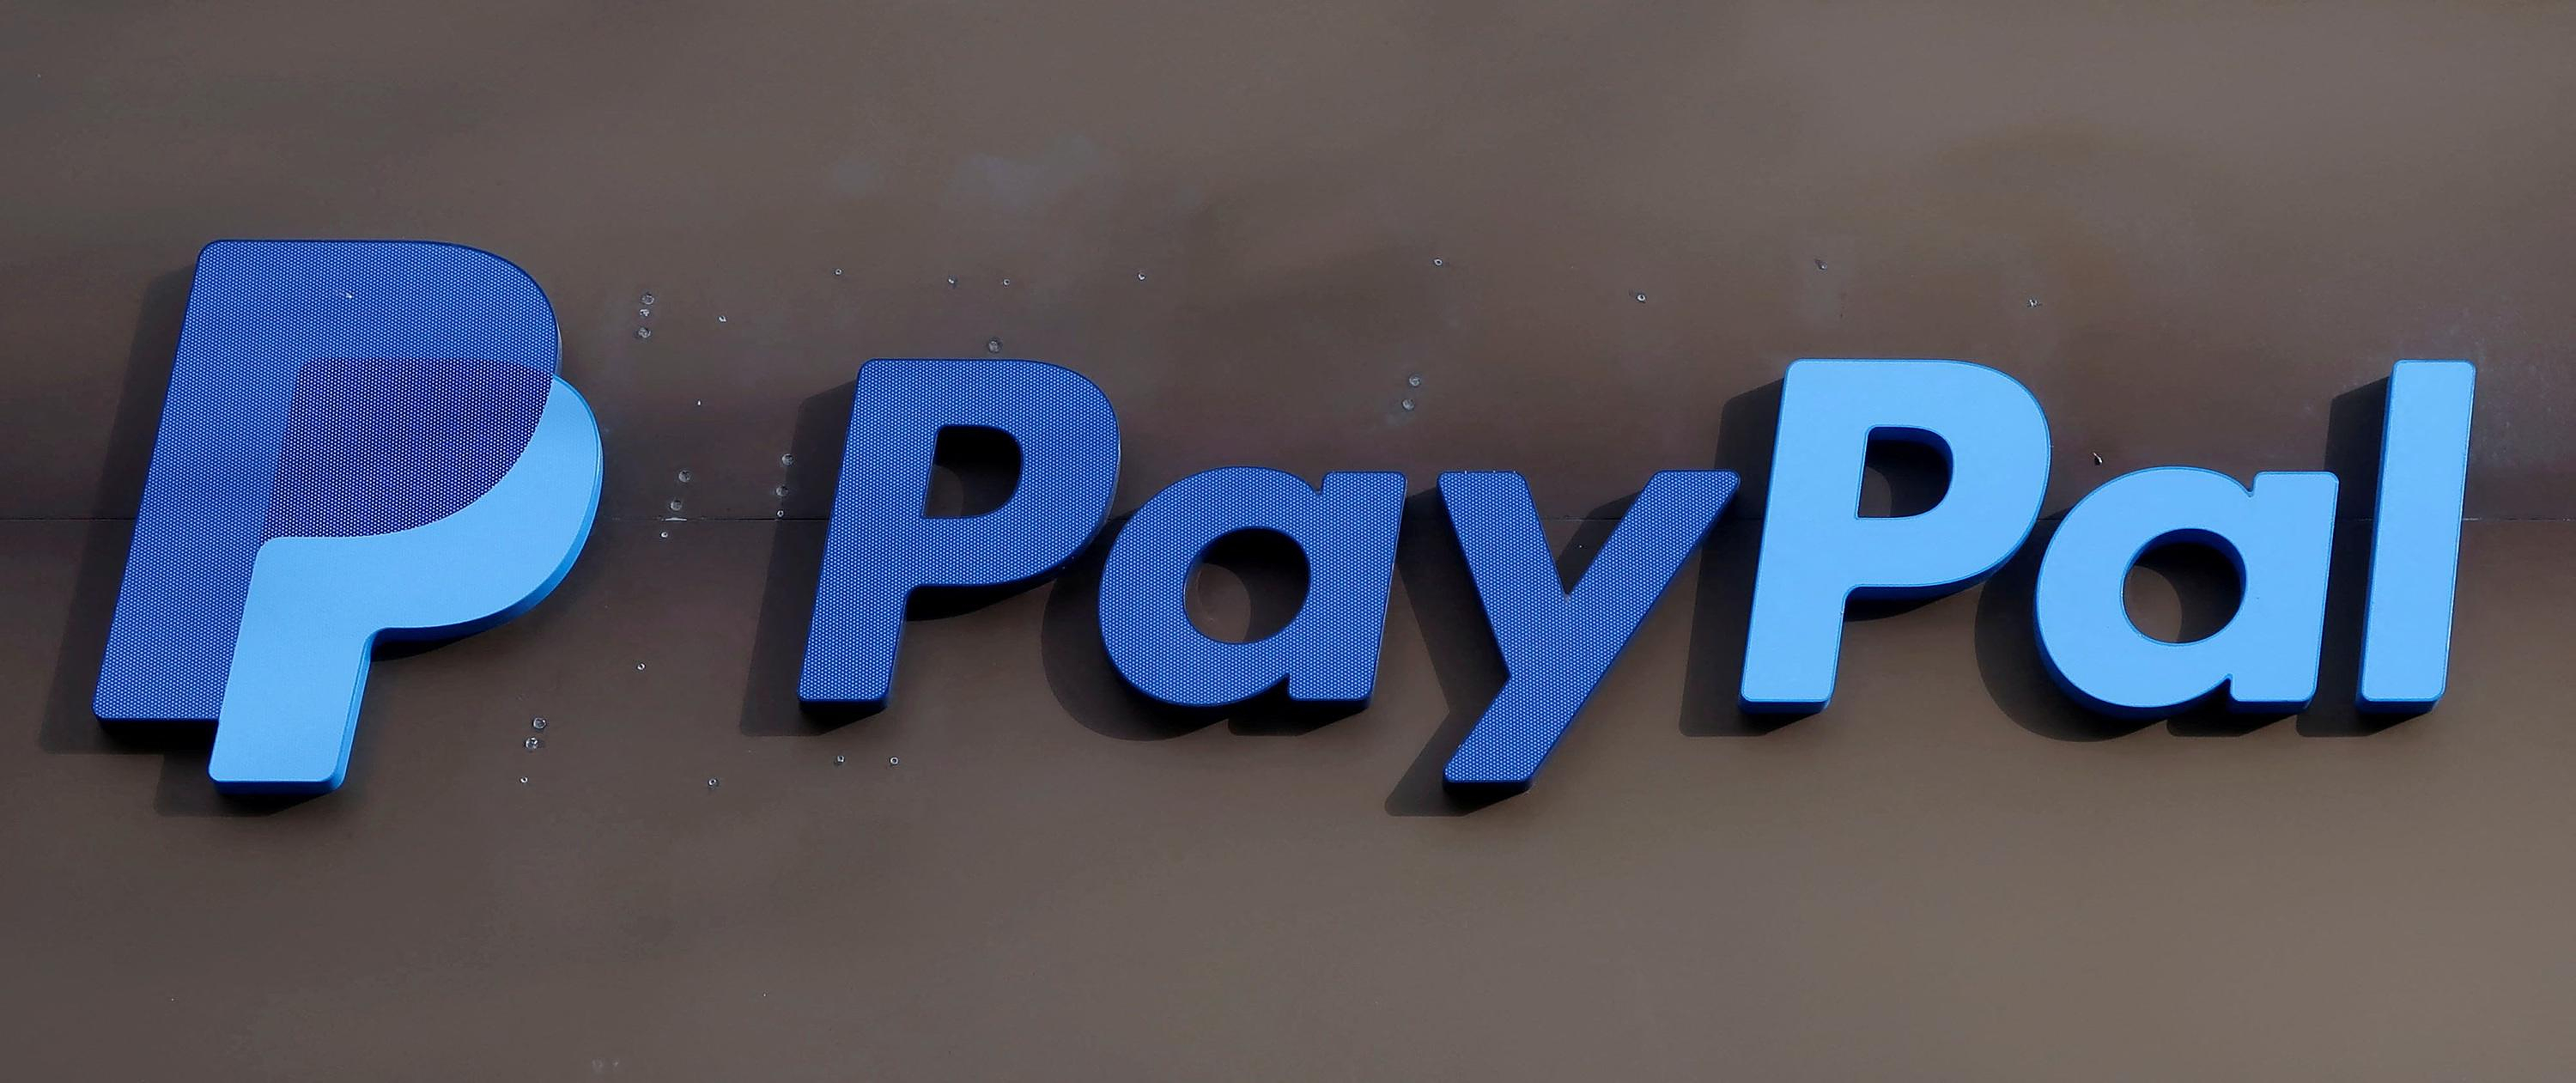 PayPal will cut around 9% of its workforce, just under 2,500 jobs